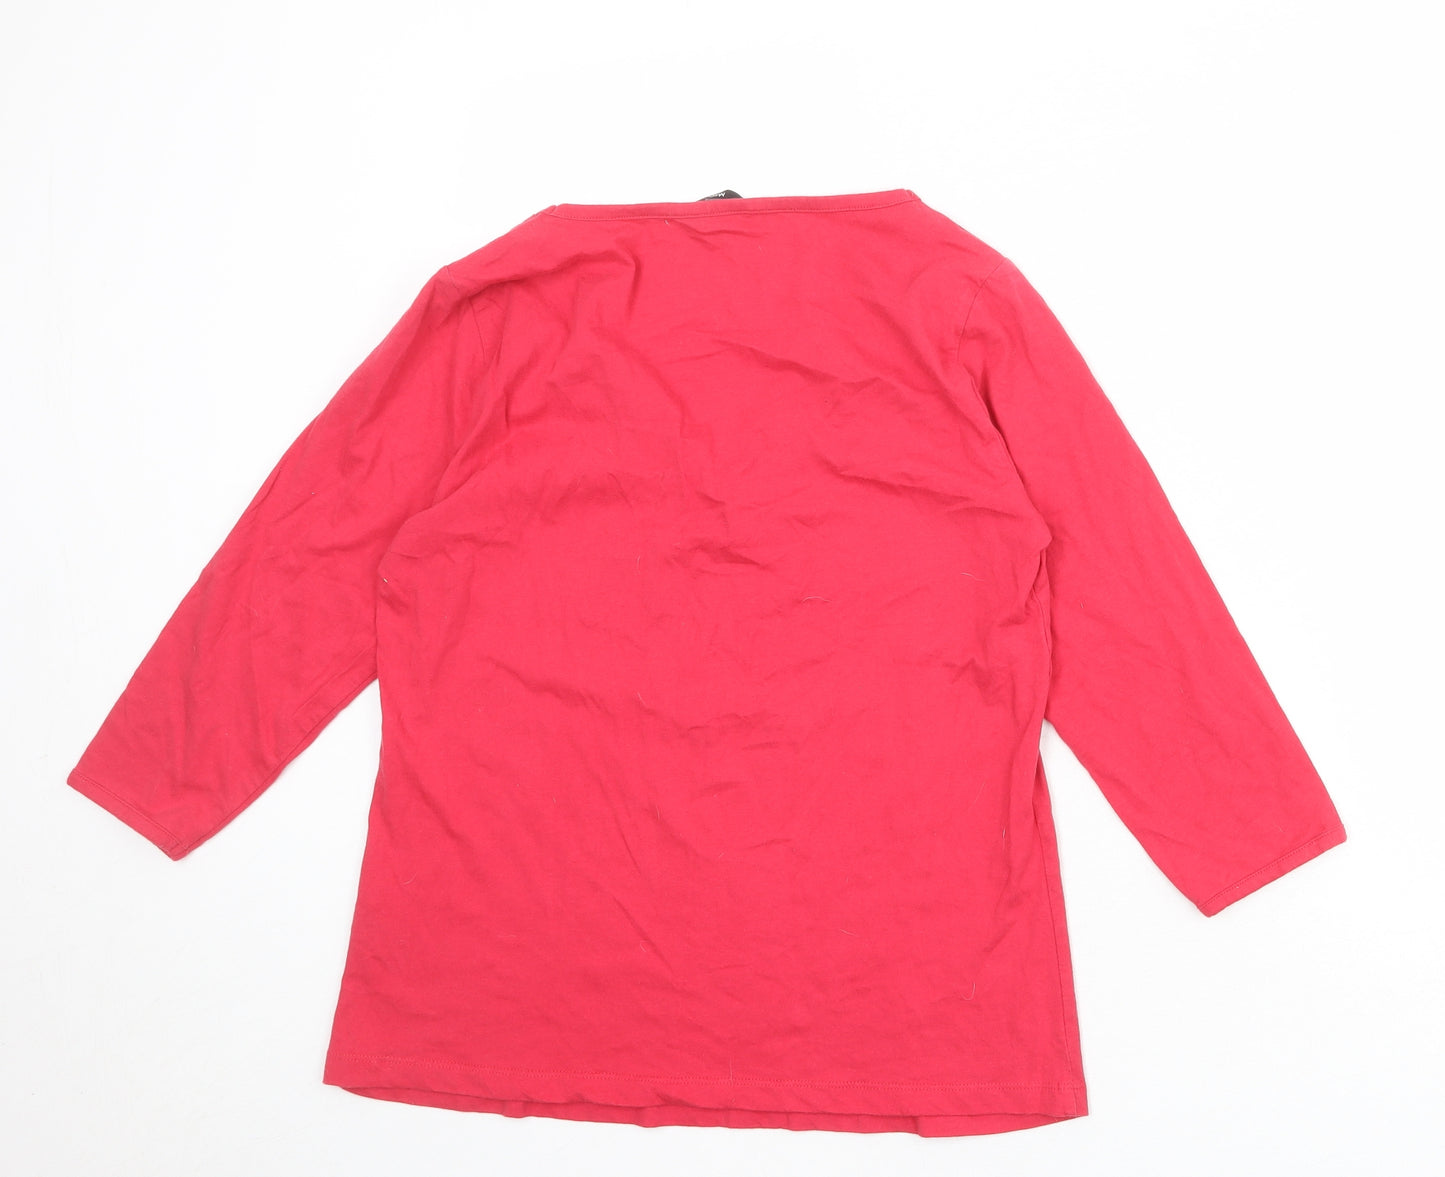 M&Co Womens Pink 100% Cotton Basic T-Shirt Size 14 V-Neck